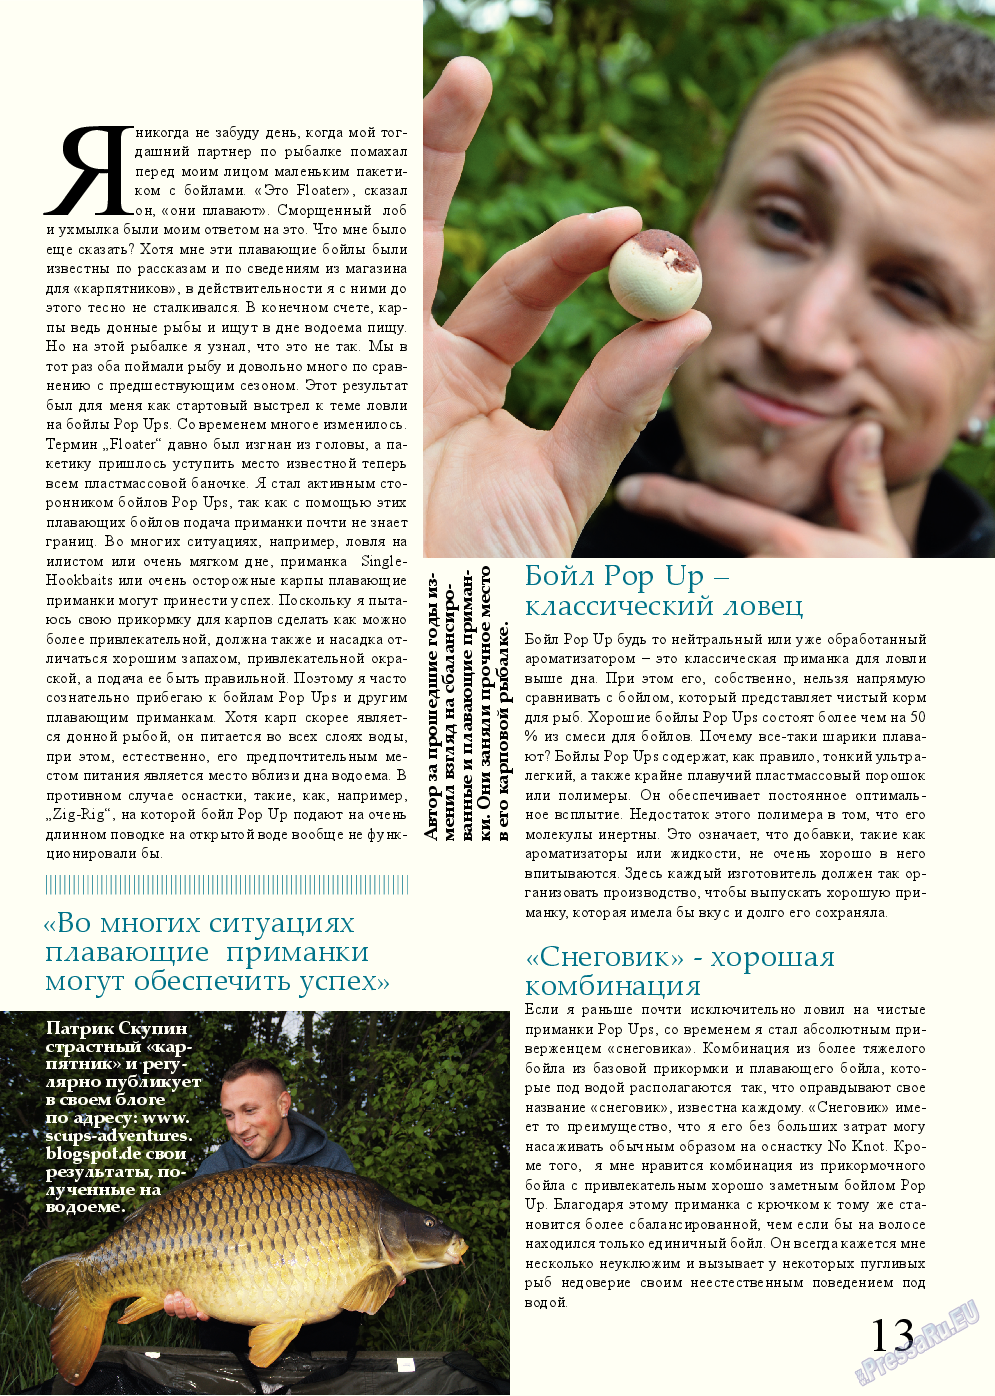 Рыбалка Plus (журнал). 2015 год, номер 2, стр. 13